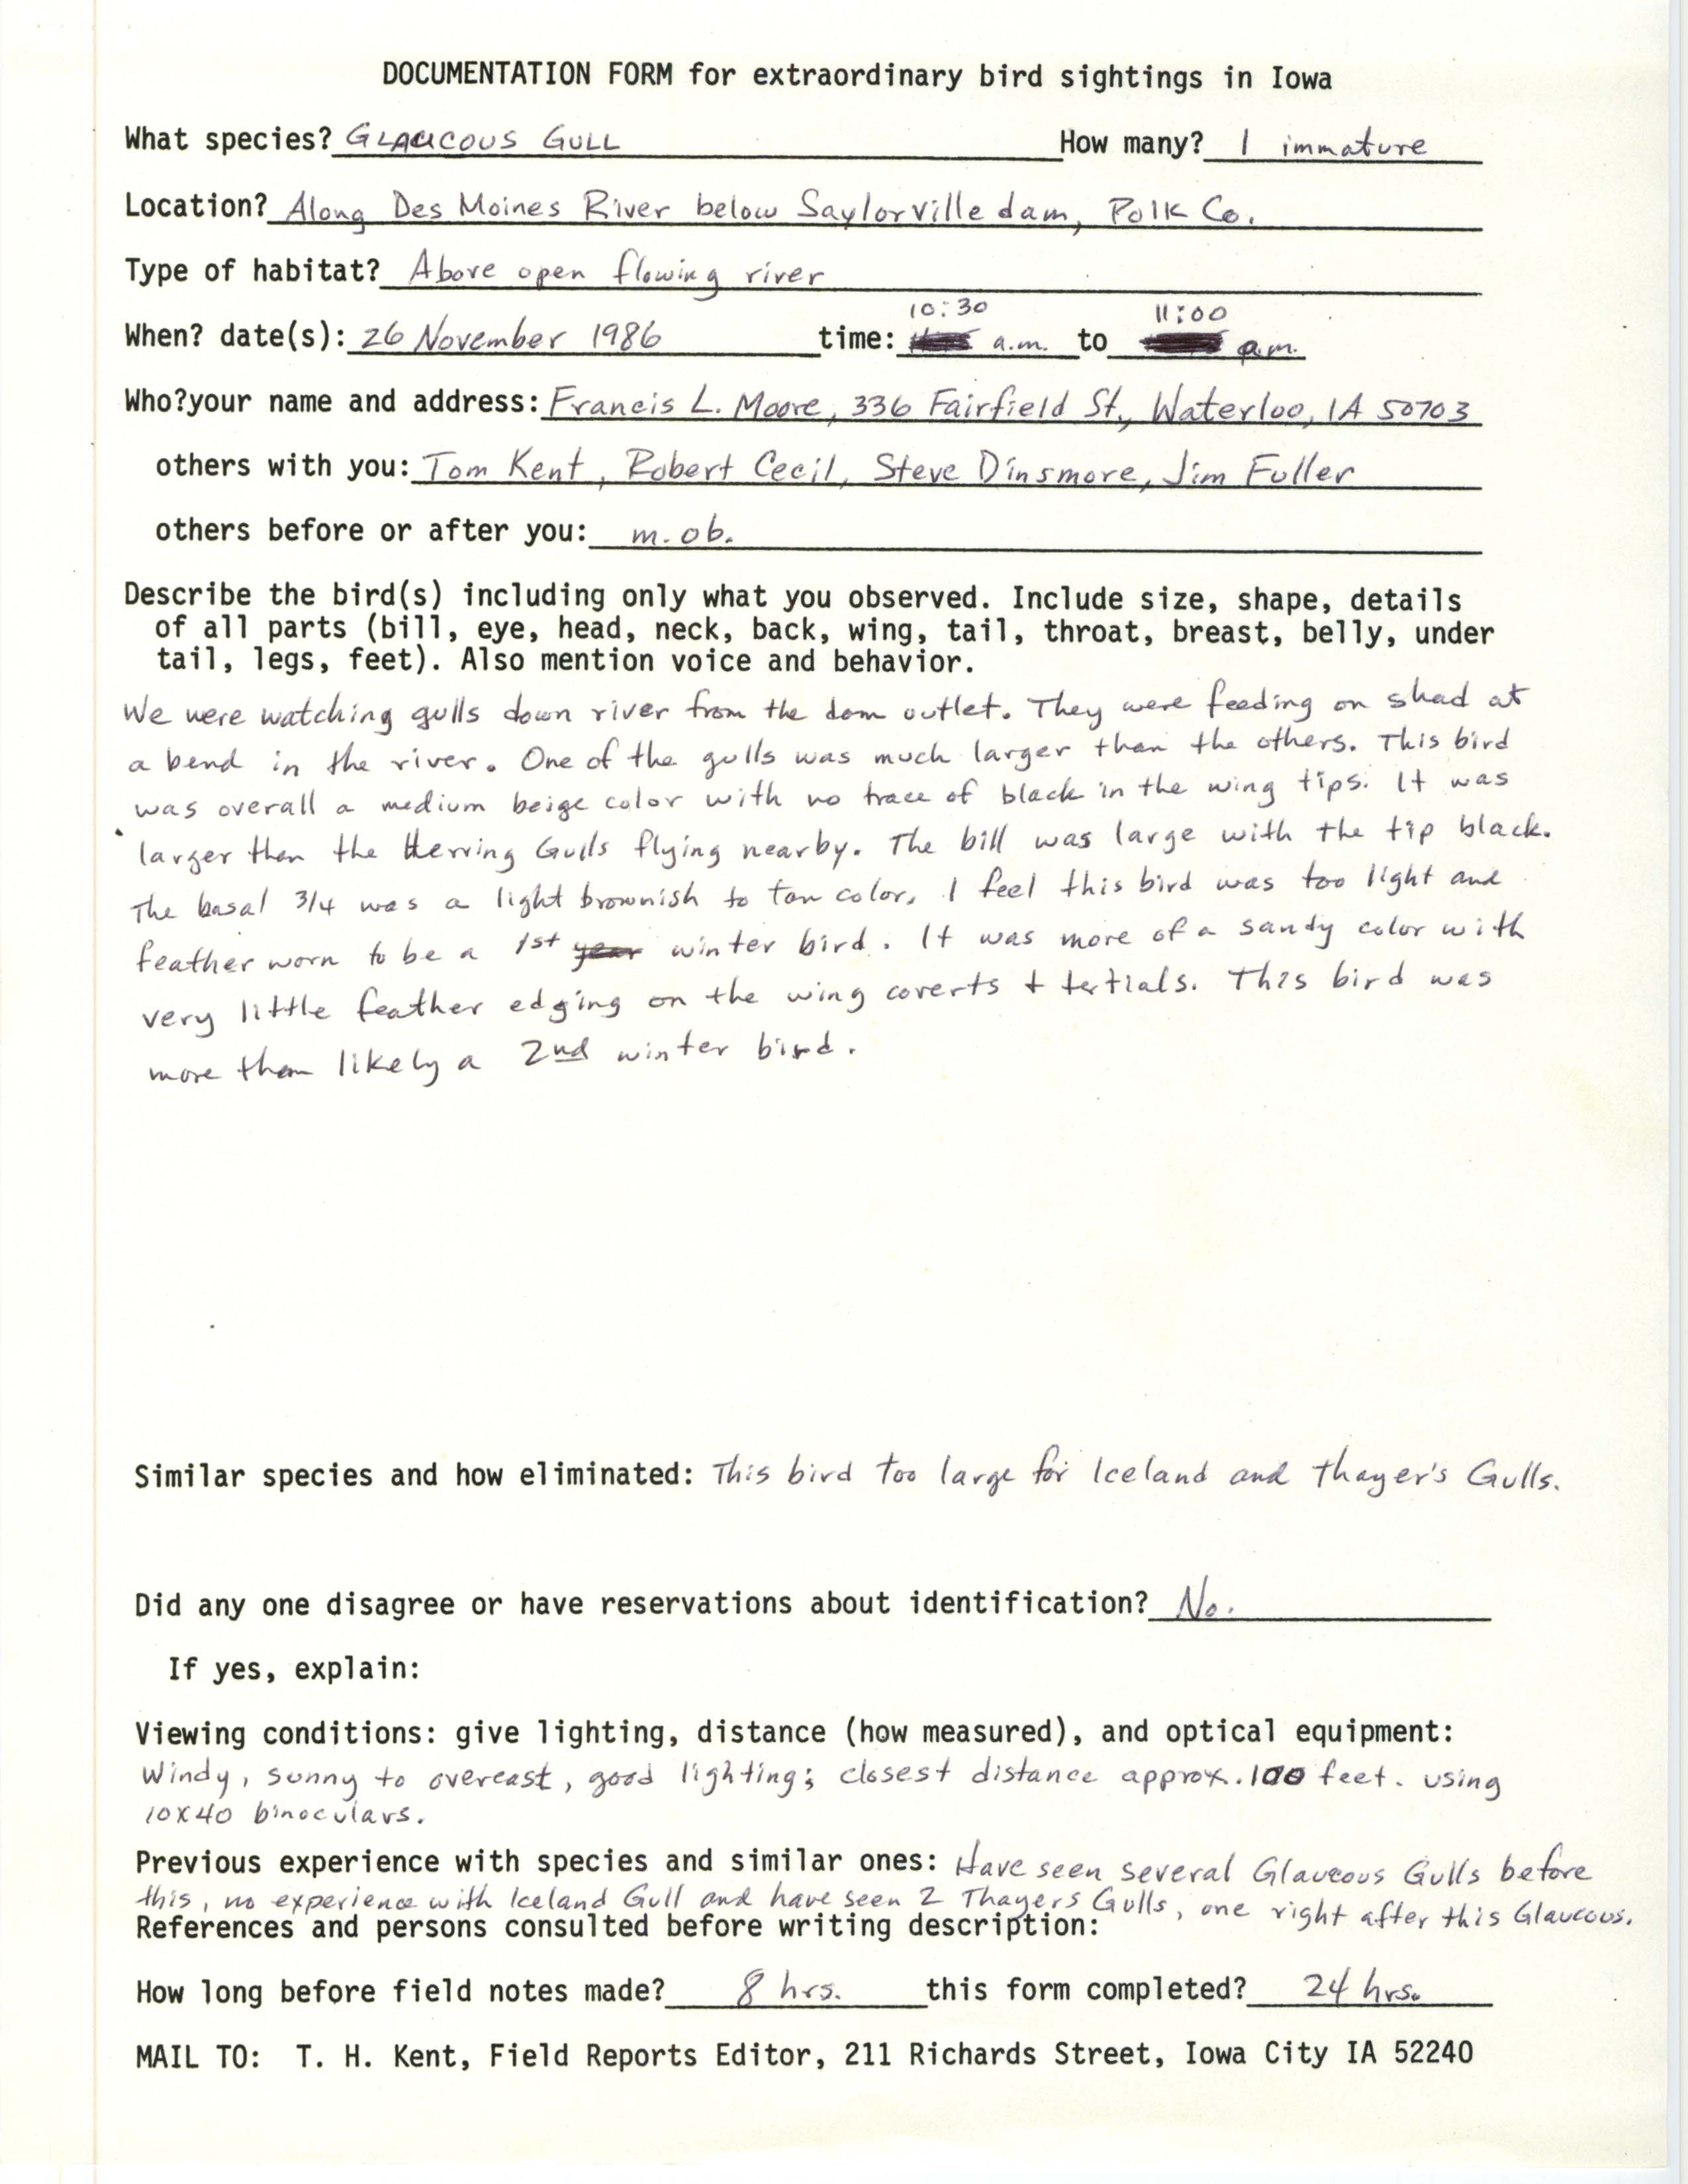 Rare bird documentation form for Glaucous Gull at Saylorville Dam, 1986